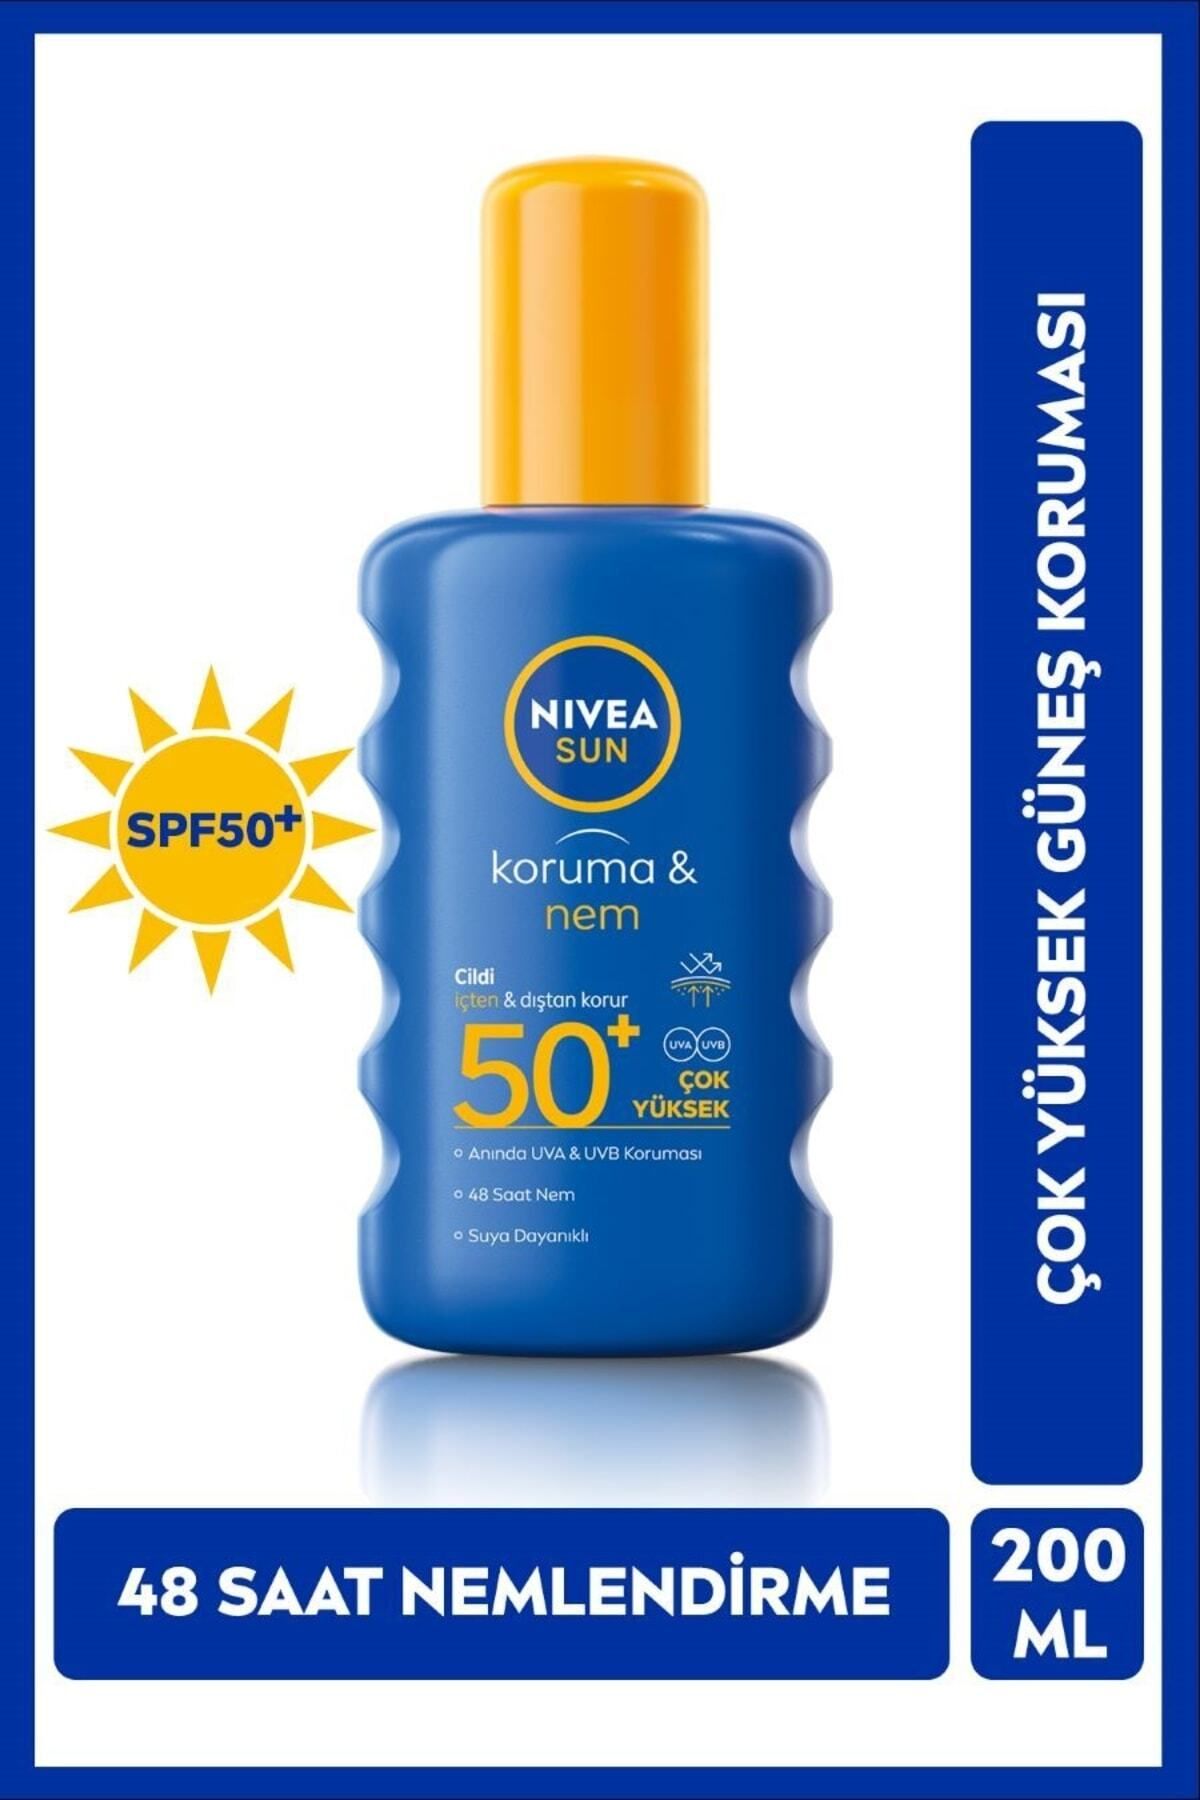 NIVEA کرم ضد آفتاب SPF50 با حجم 200 میلی لیتر، ضدآفتاب بسیار قوی و مرطوب کننده 48 ساعته